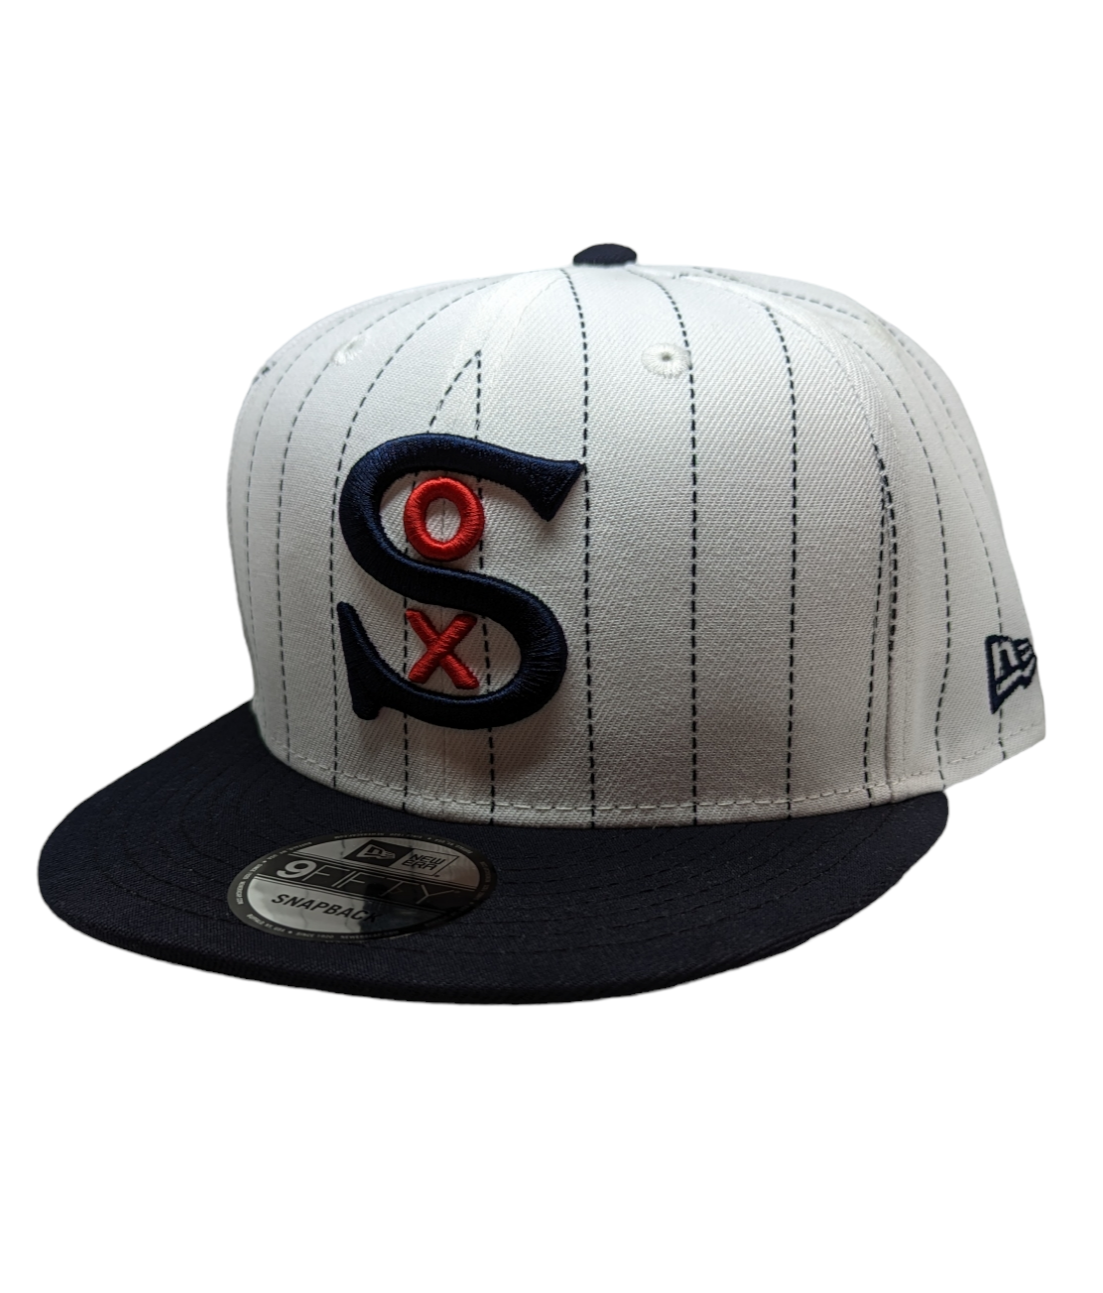 Chicago White Sox New Era 1917 2 Tone White Pinstripe/Navy 9FIFTY Snapback Adjustable Hat